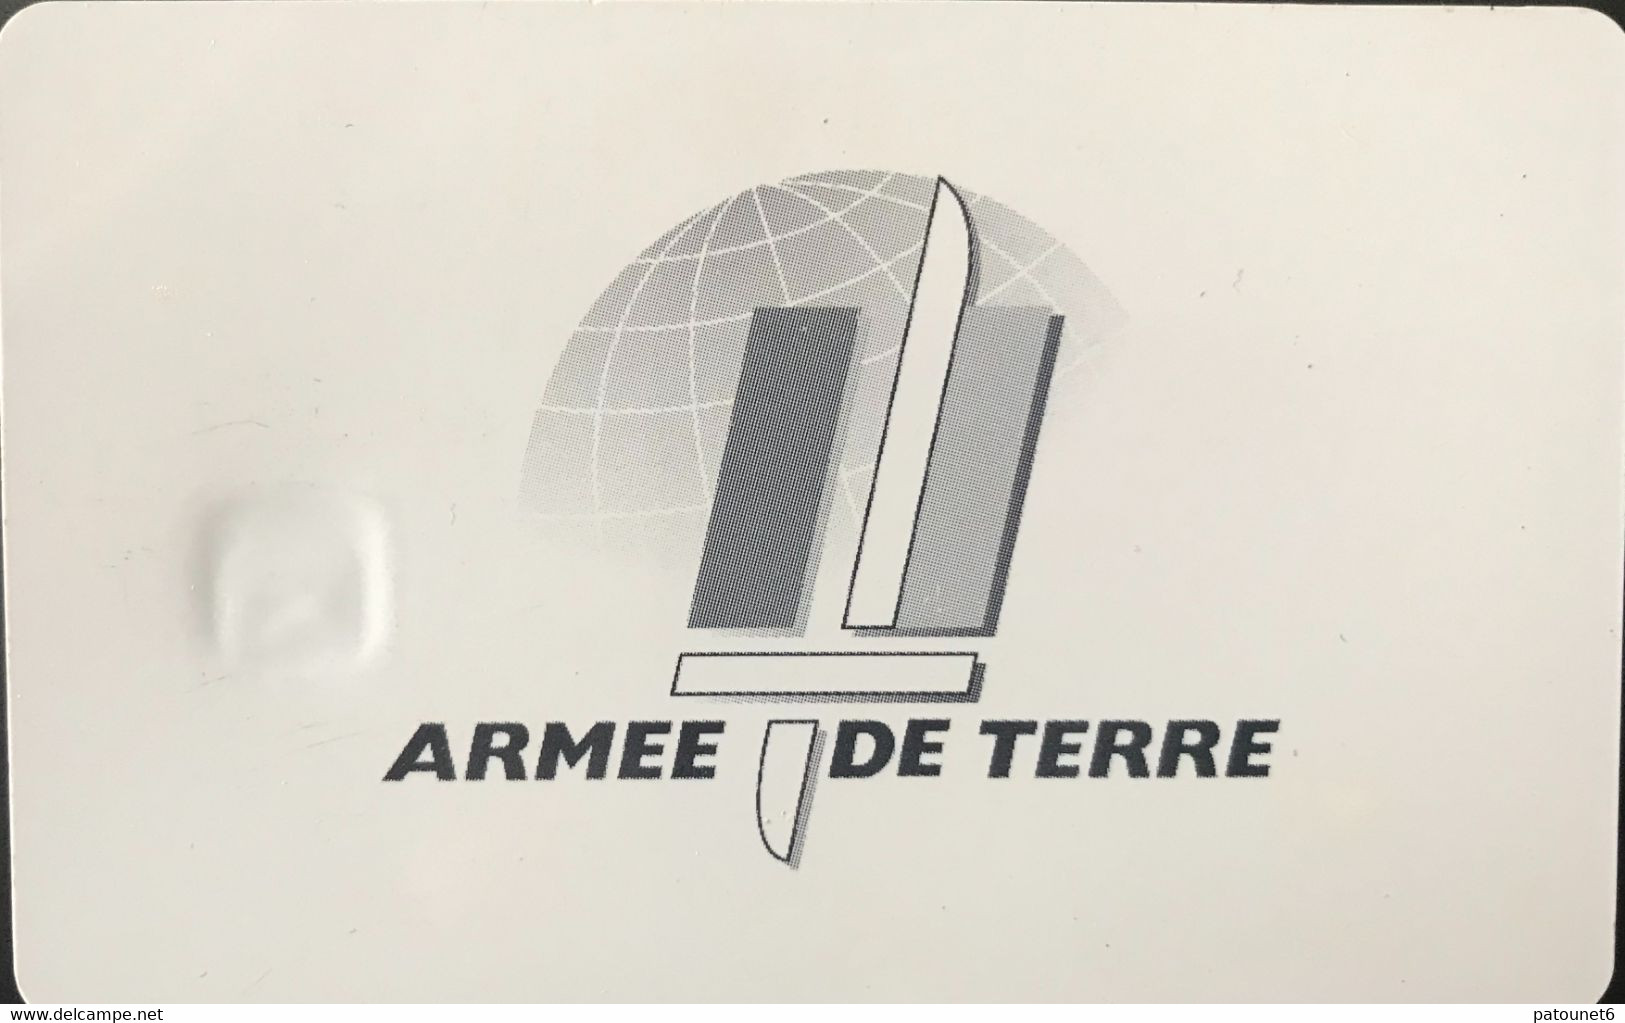 FRANCE  -  ARMEE  -  Phonecard  -  ECOPHONING  -  ARMEE DE TERRE  -  Bleu - 150 FF - Militares